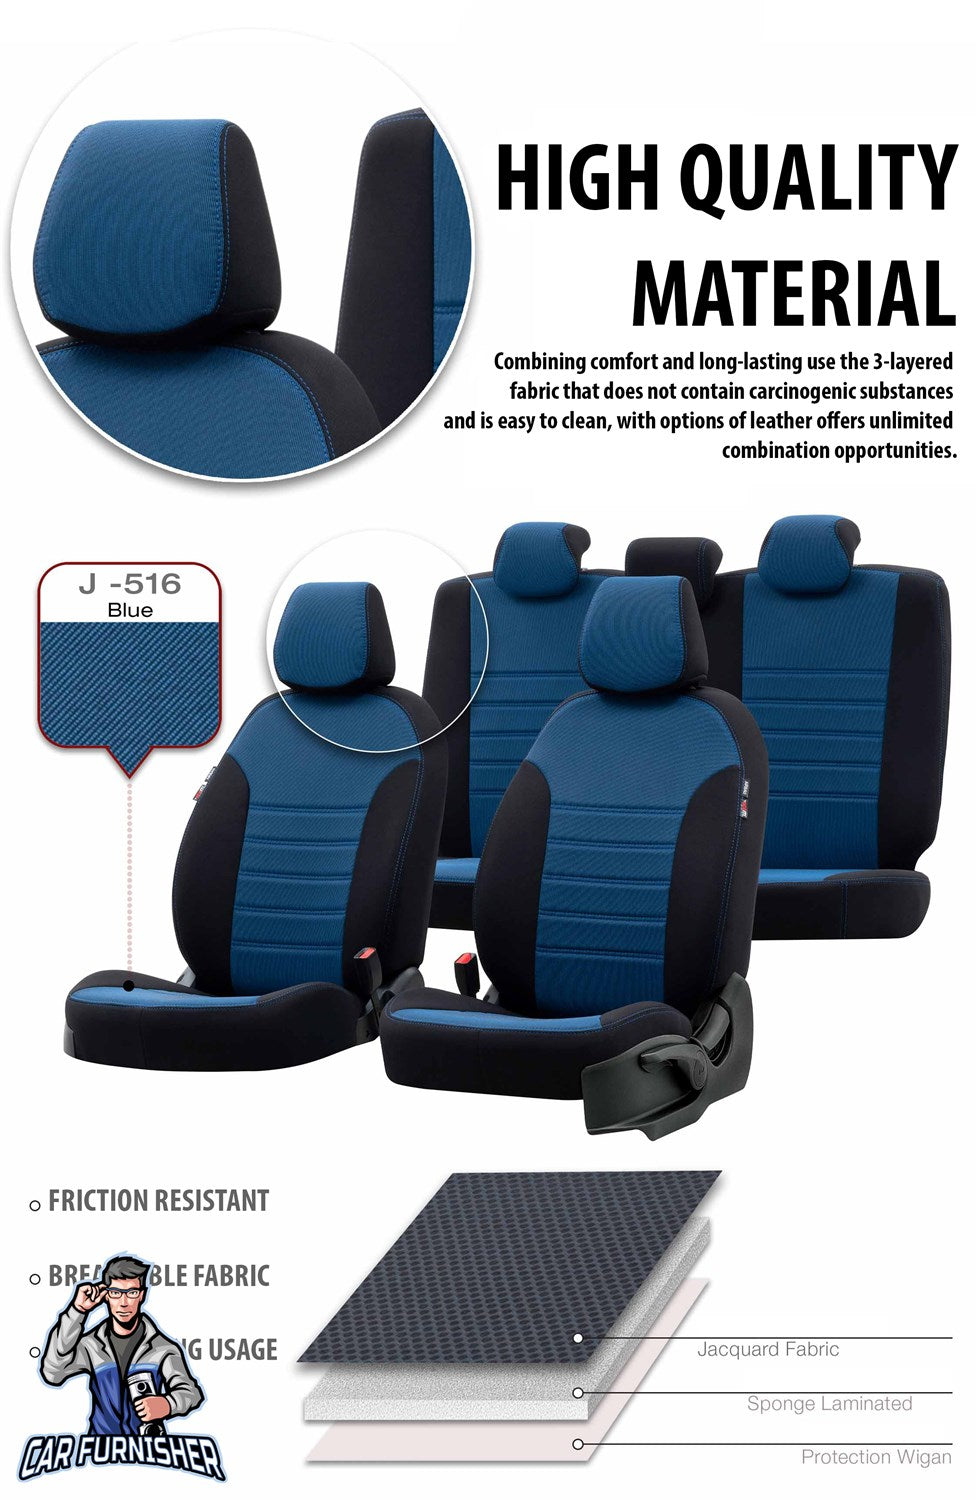 Toyota Corolla Seat Cover Original Jacquard Design Dark Gray Jacquard Fabric